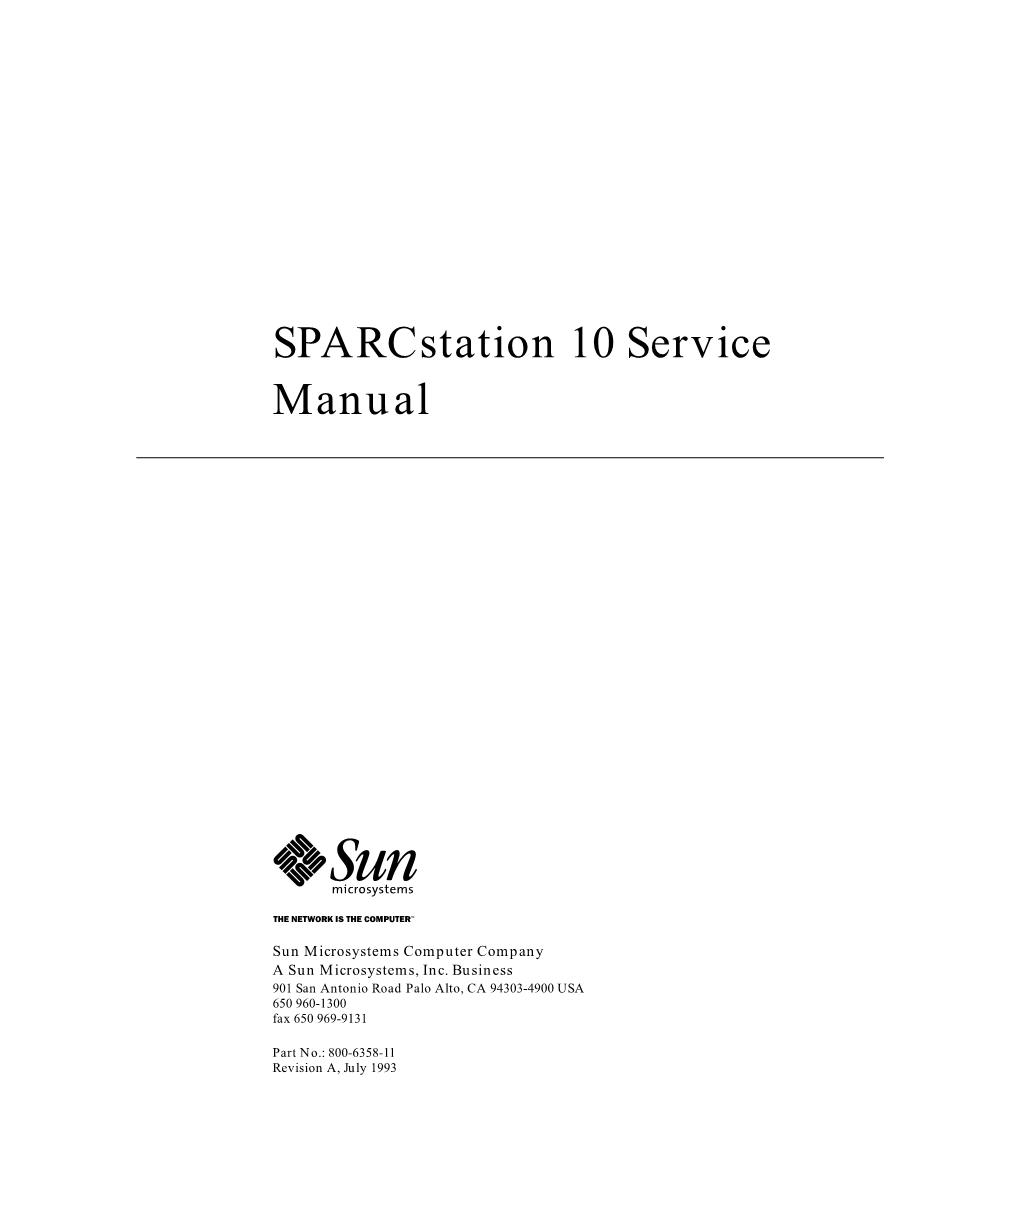 Sparcstation 10 Service Manual